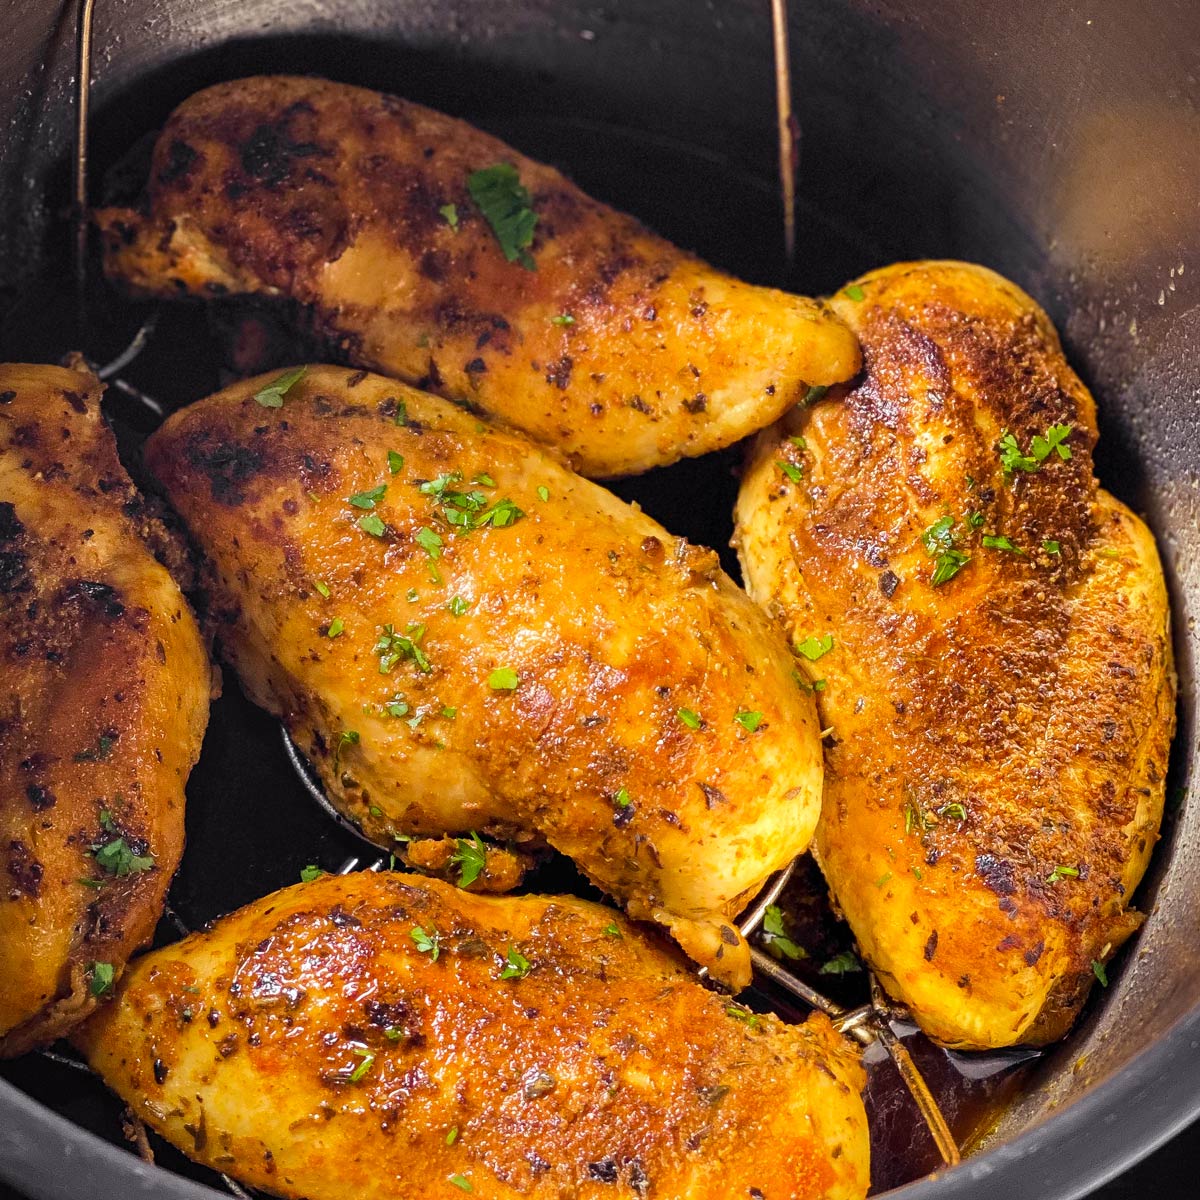 https://www.savorynothings.com/wp-content/uploads/2022/01/instant-pot-chicken-breast-recipe-image-sq-1.jpg